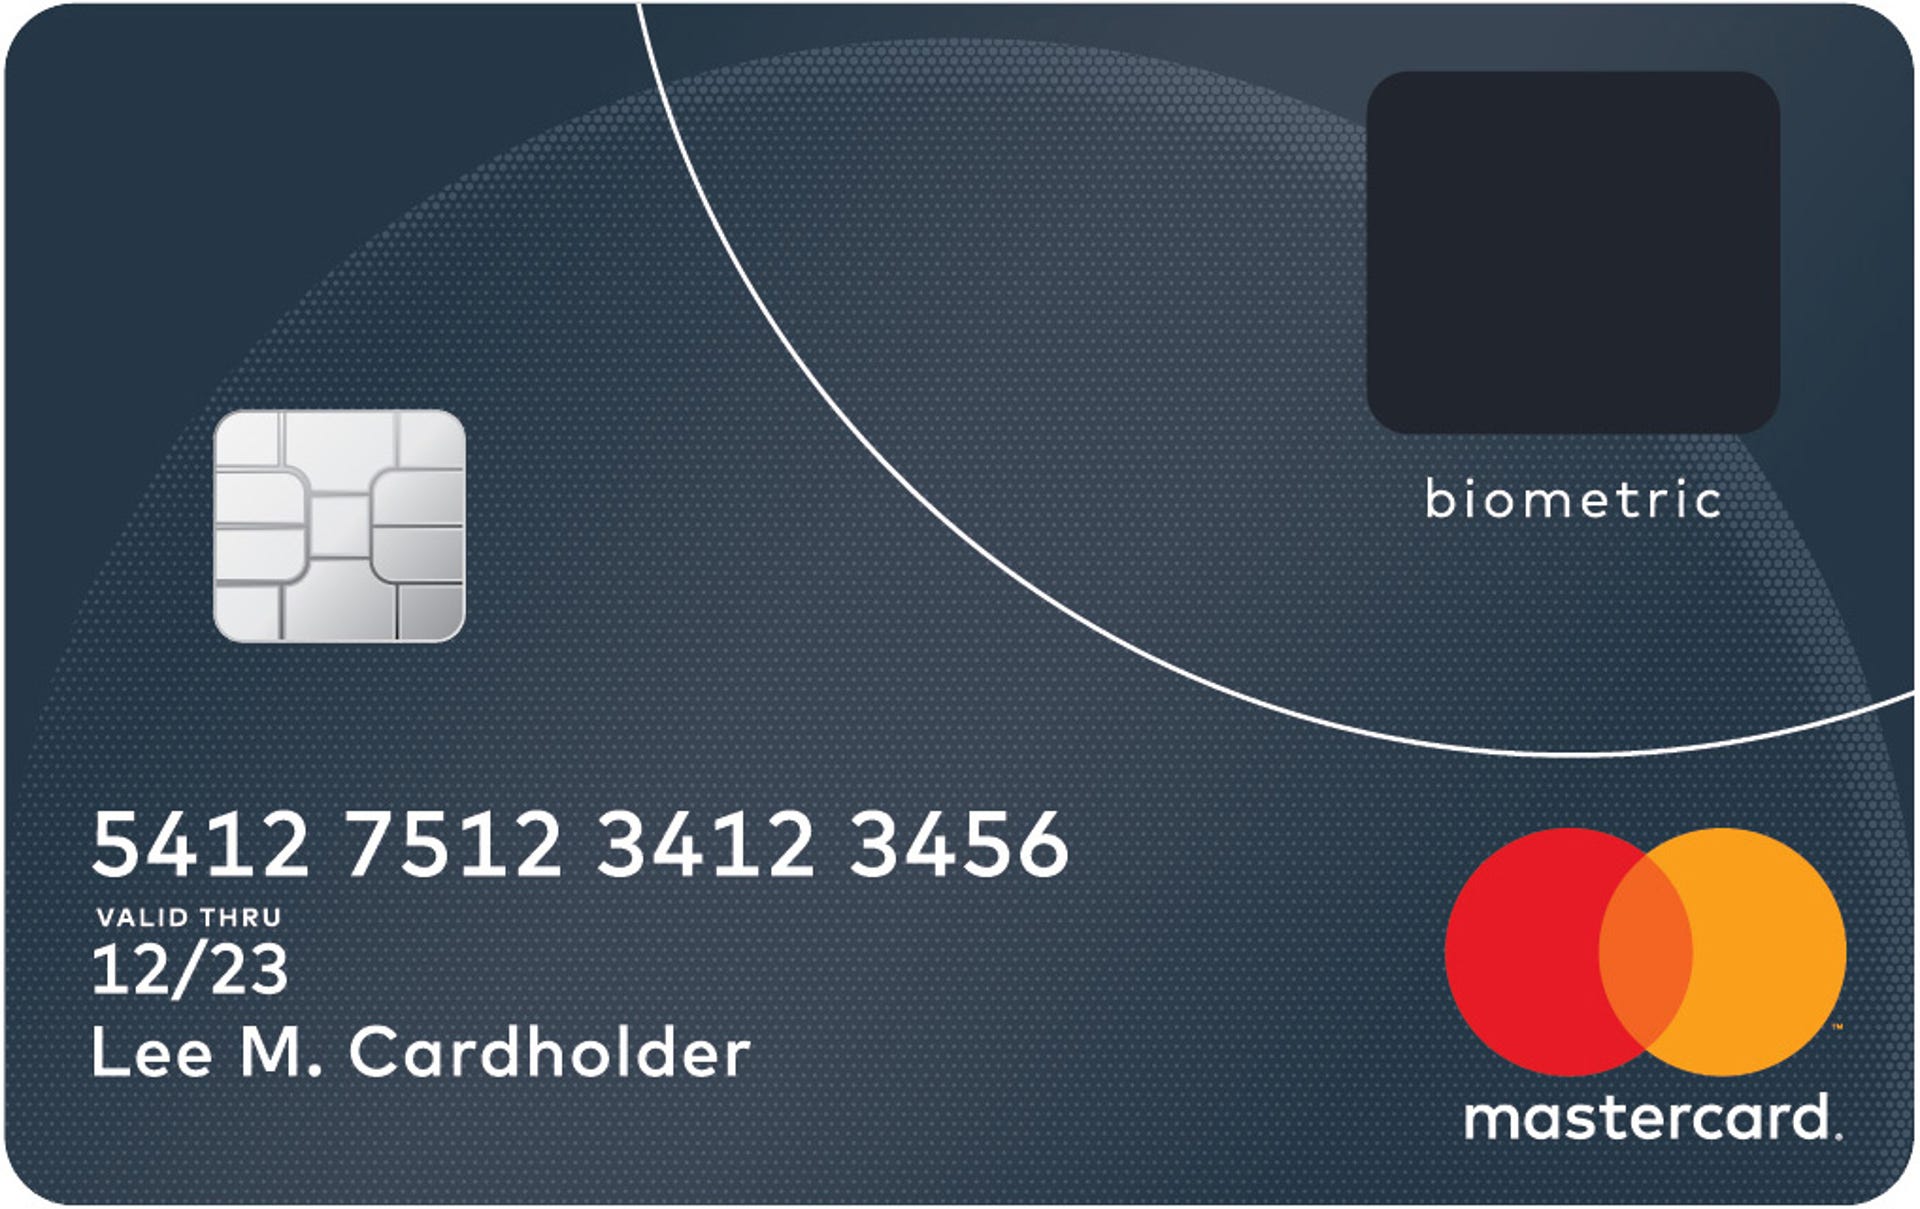 mastercard-biometric-card.jpg